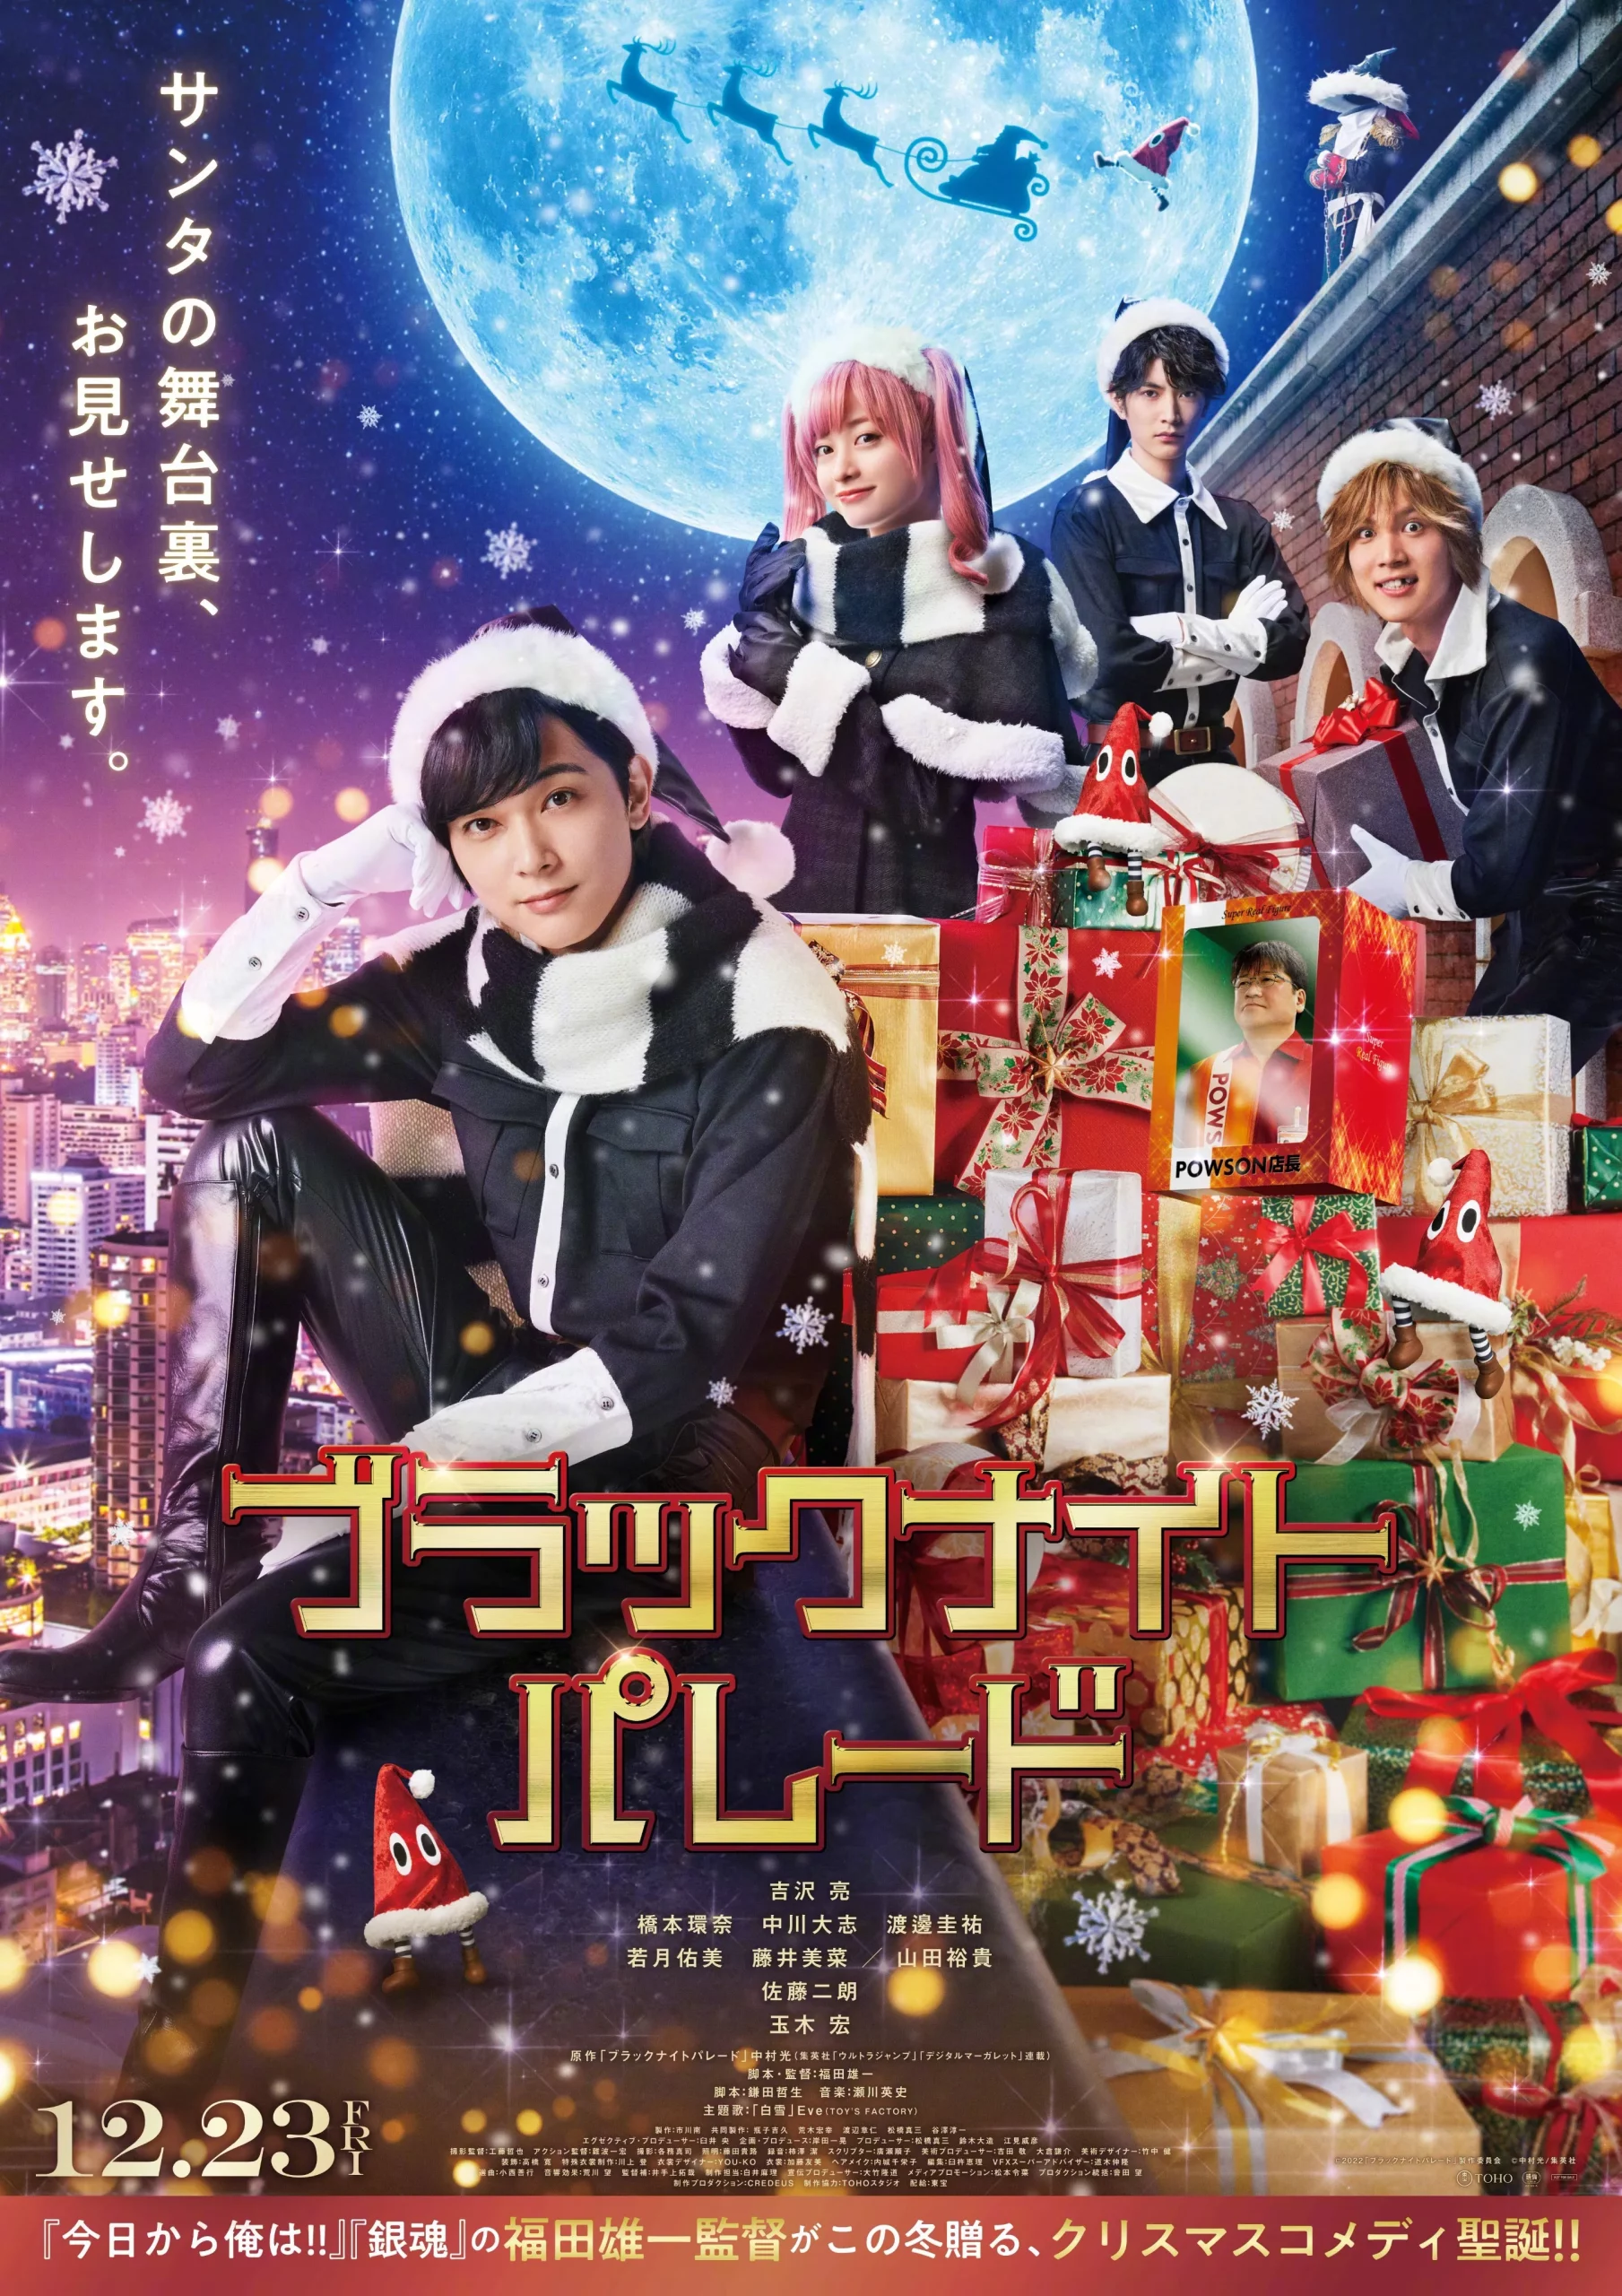 New movie "Black Night Parade" starring Yoshizawa Ryo and Hashimoto Kanna released trailer and poster | FMV6